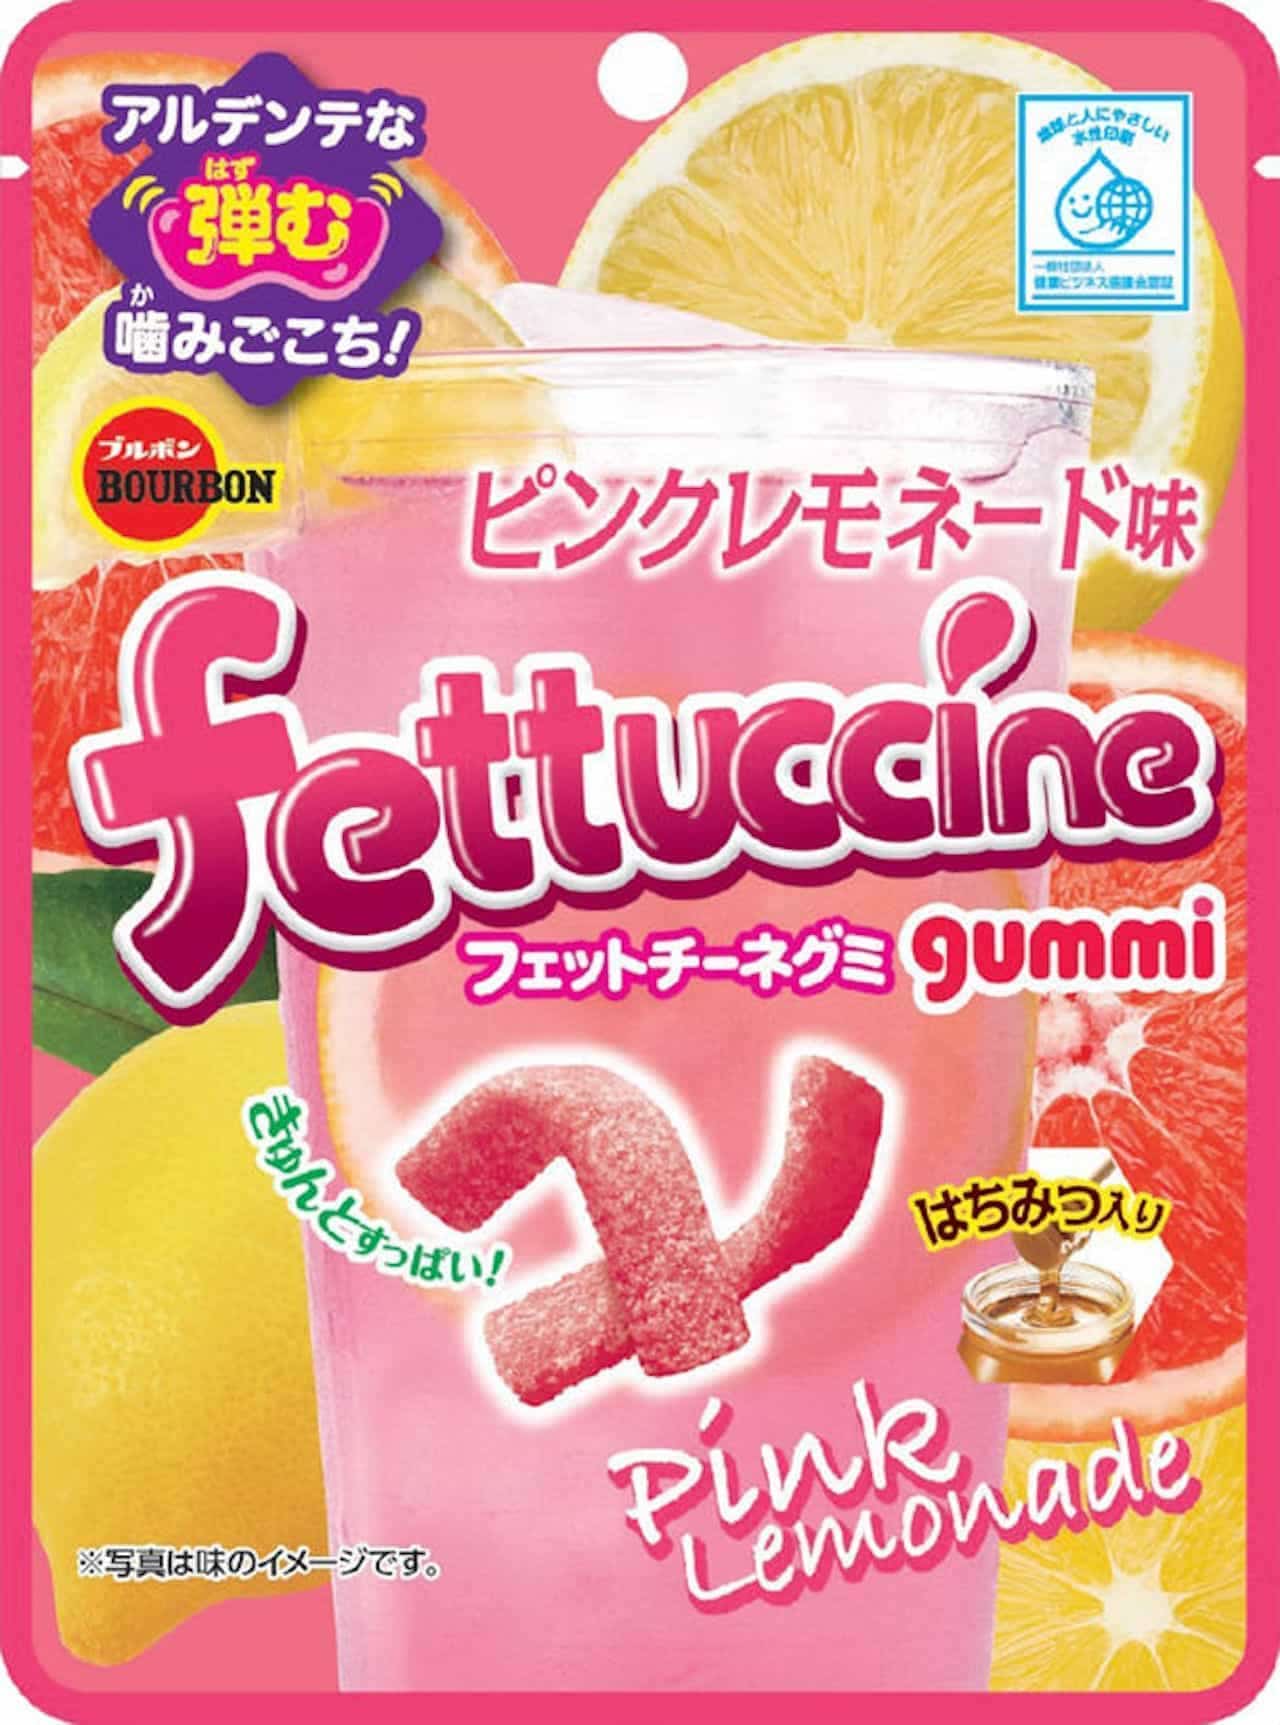 "Fettuccine Gummy Pink Lemonade Flavor" from Bourbon